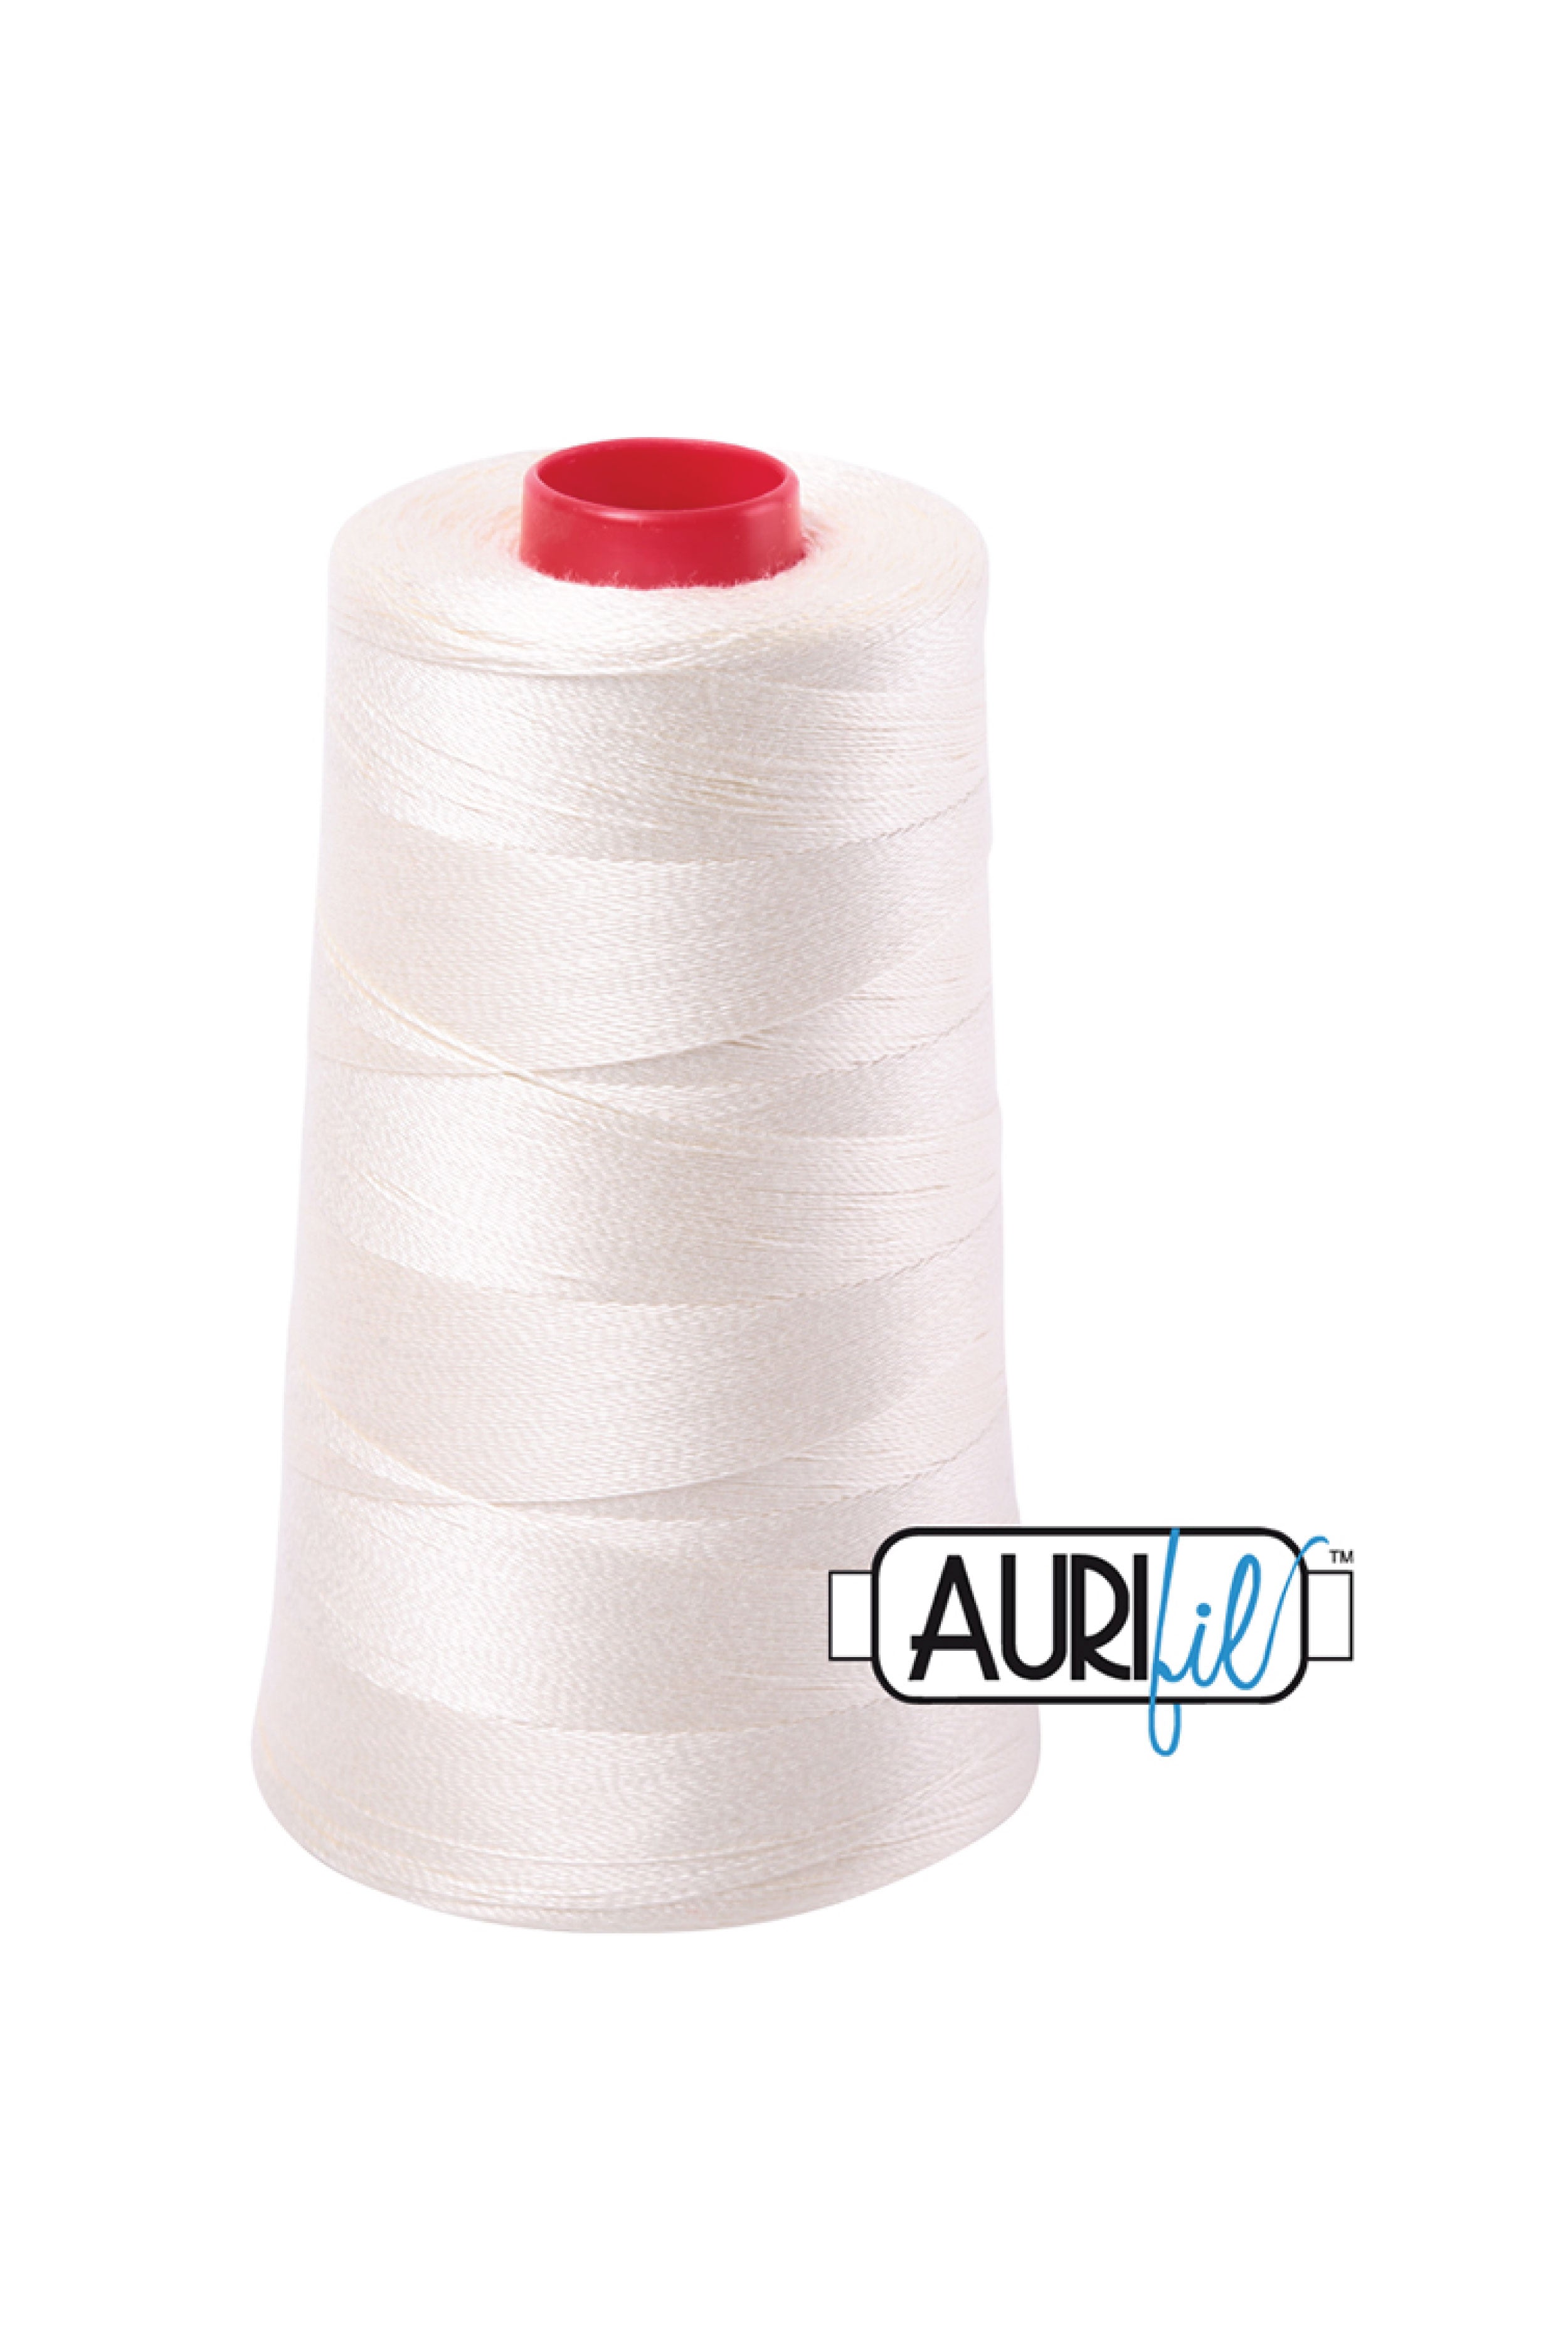 Aurifil Thread - Cone  Lo & Behold Stitchery